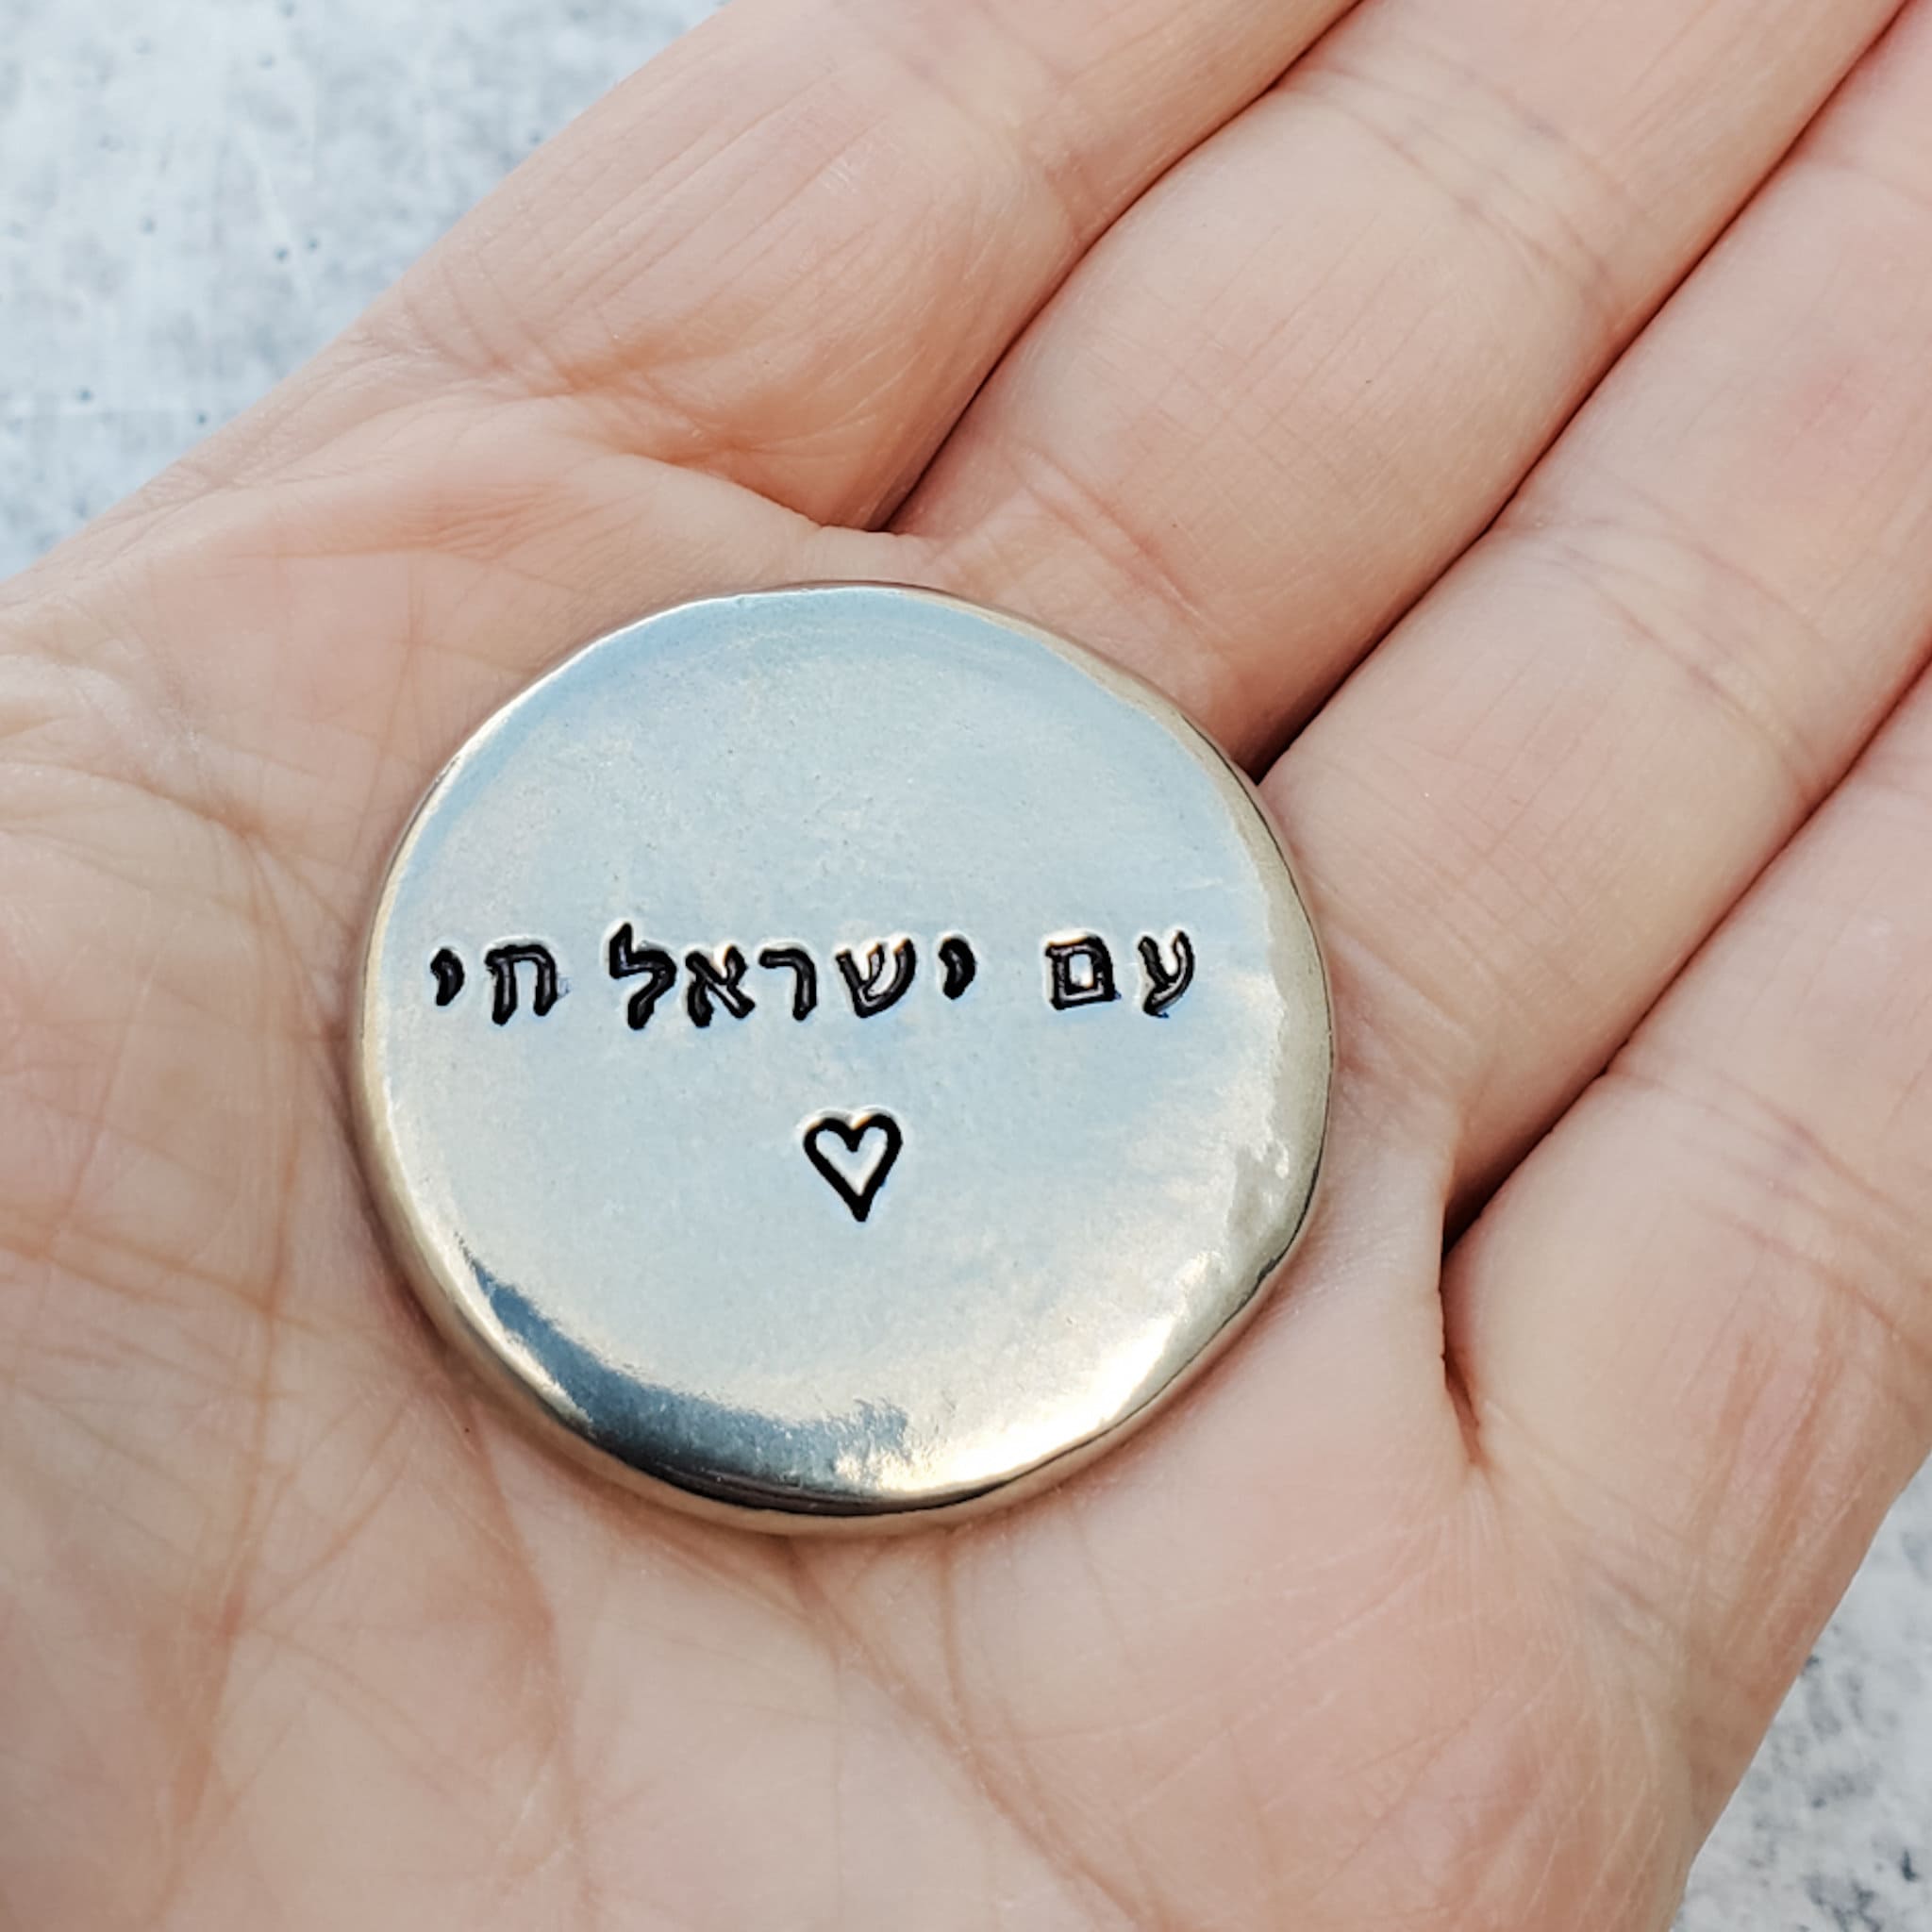 Am Yisrael Chai Jewish Pride Pocket Stone Salt and Sparkle